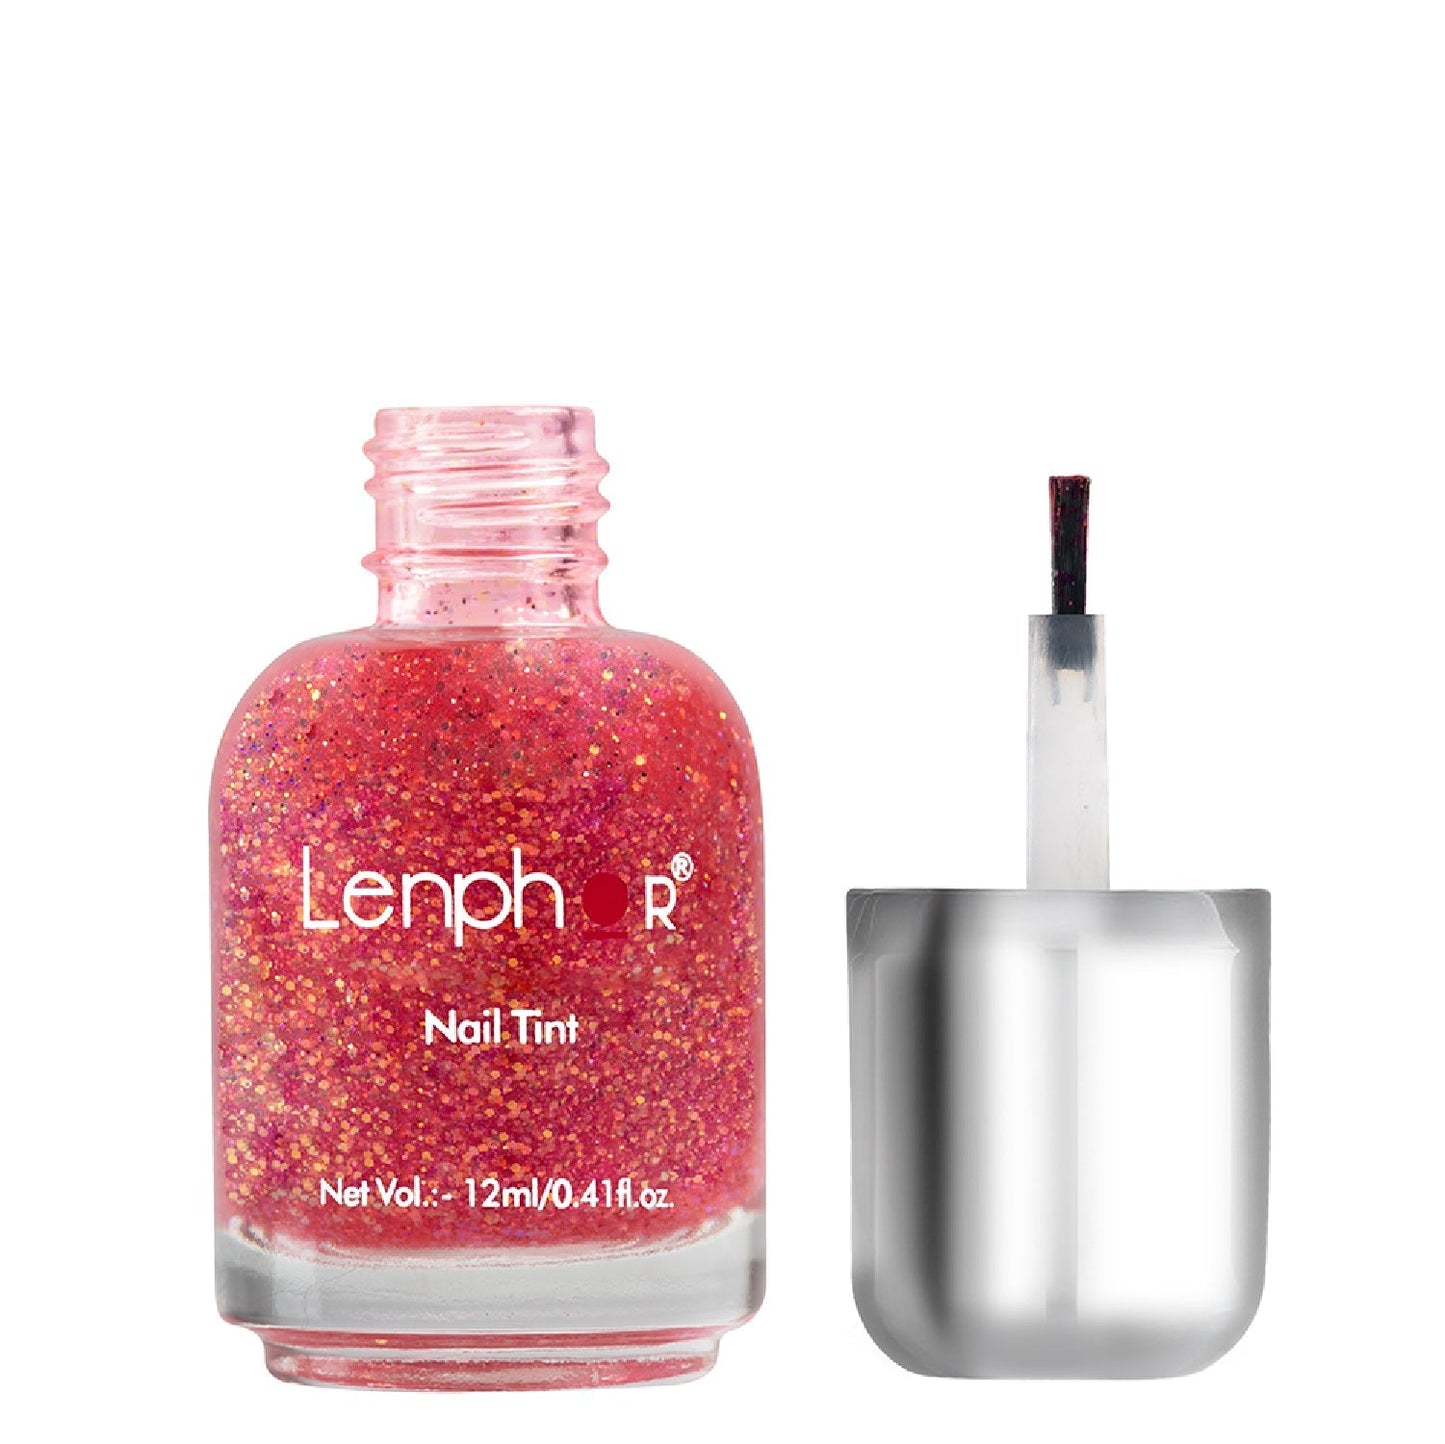 Lenphor Glitter Nail Paints